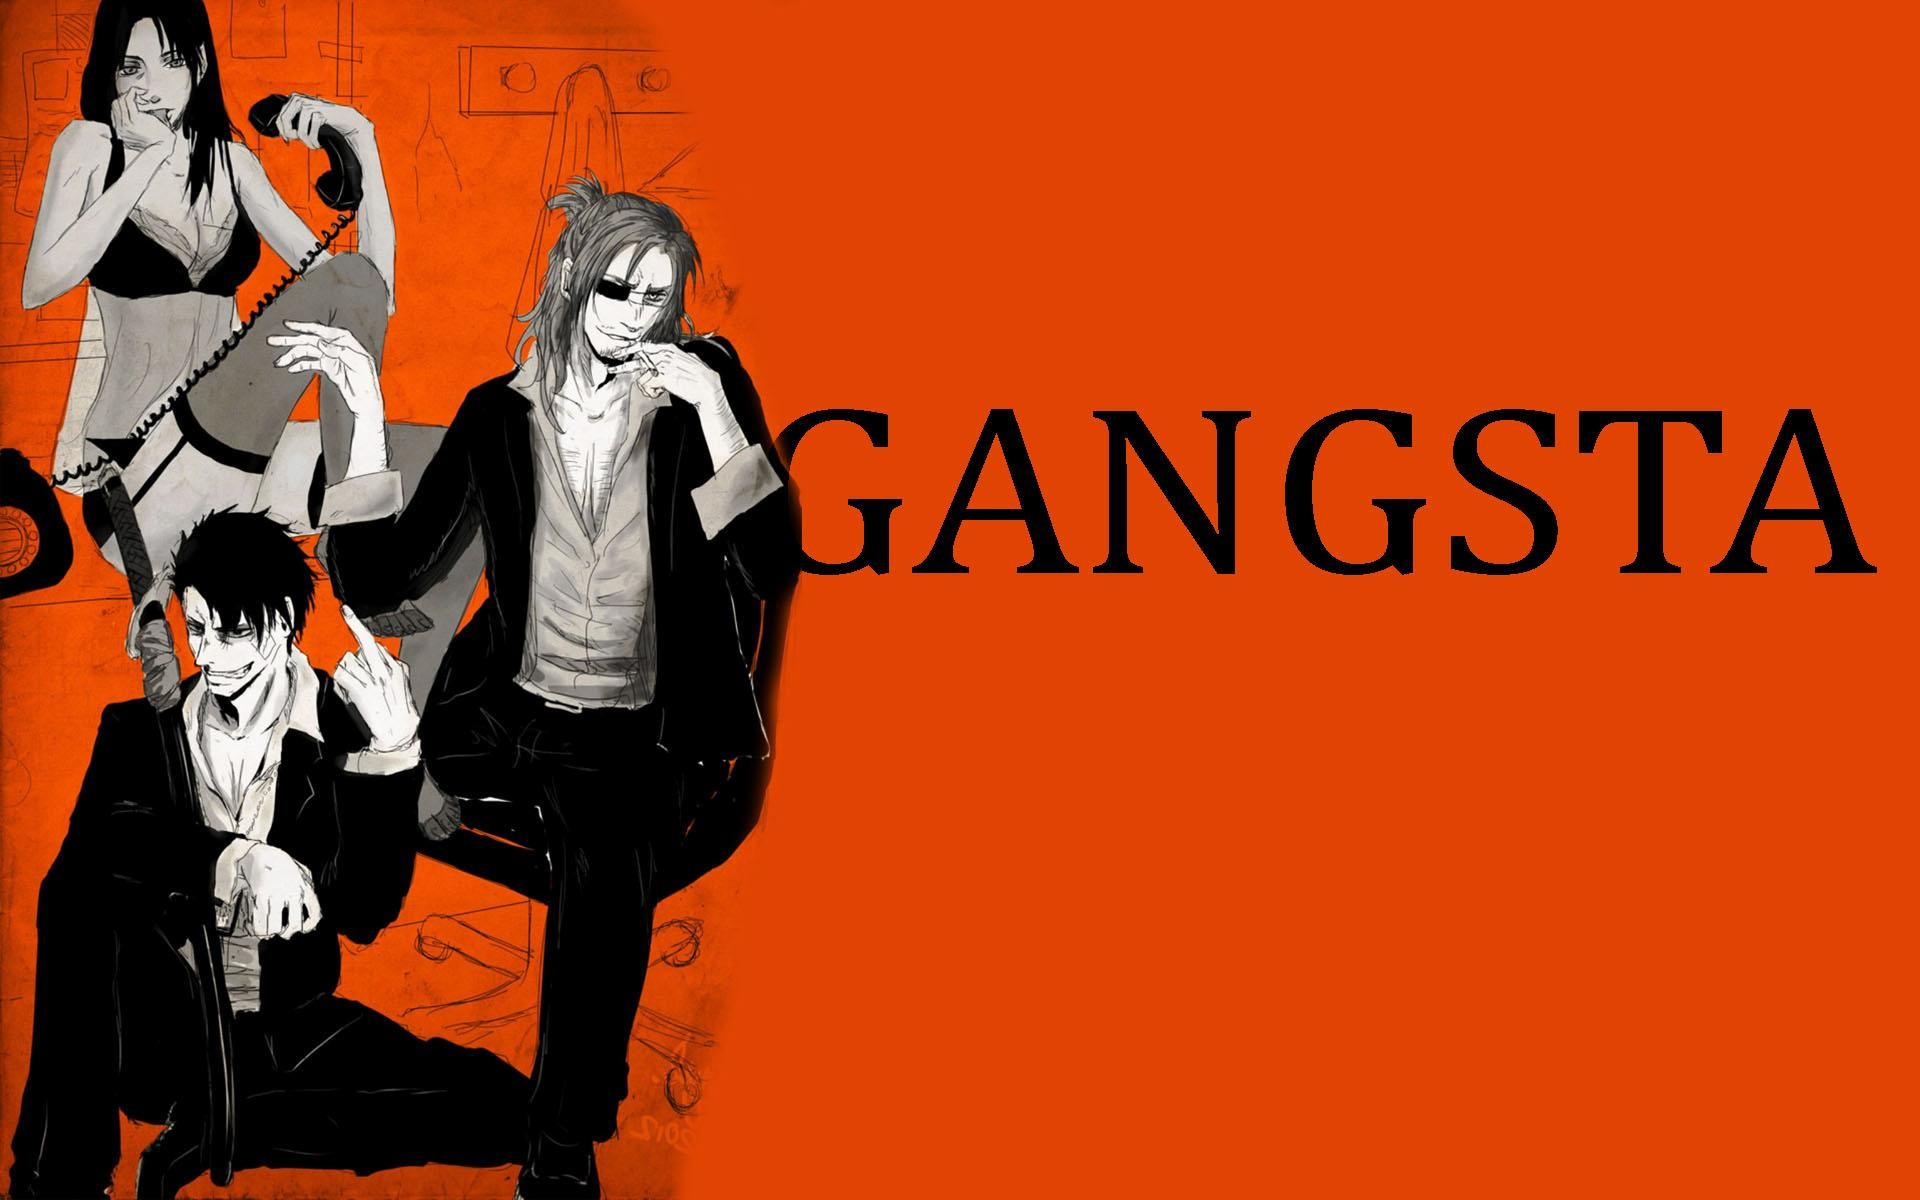 Wallpaper.wiki HD Gangsta Pictures PIC WPD004433